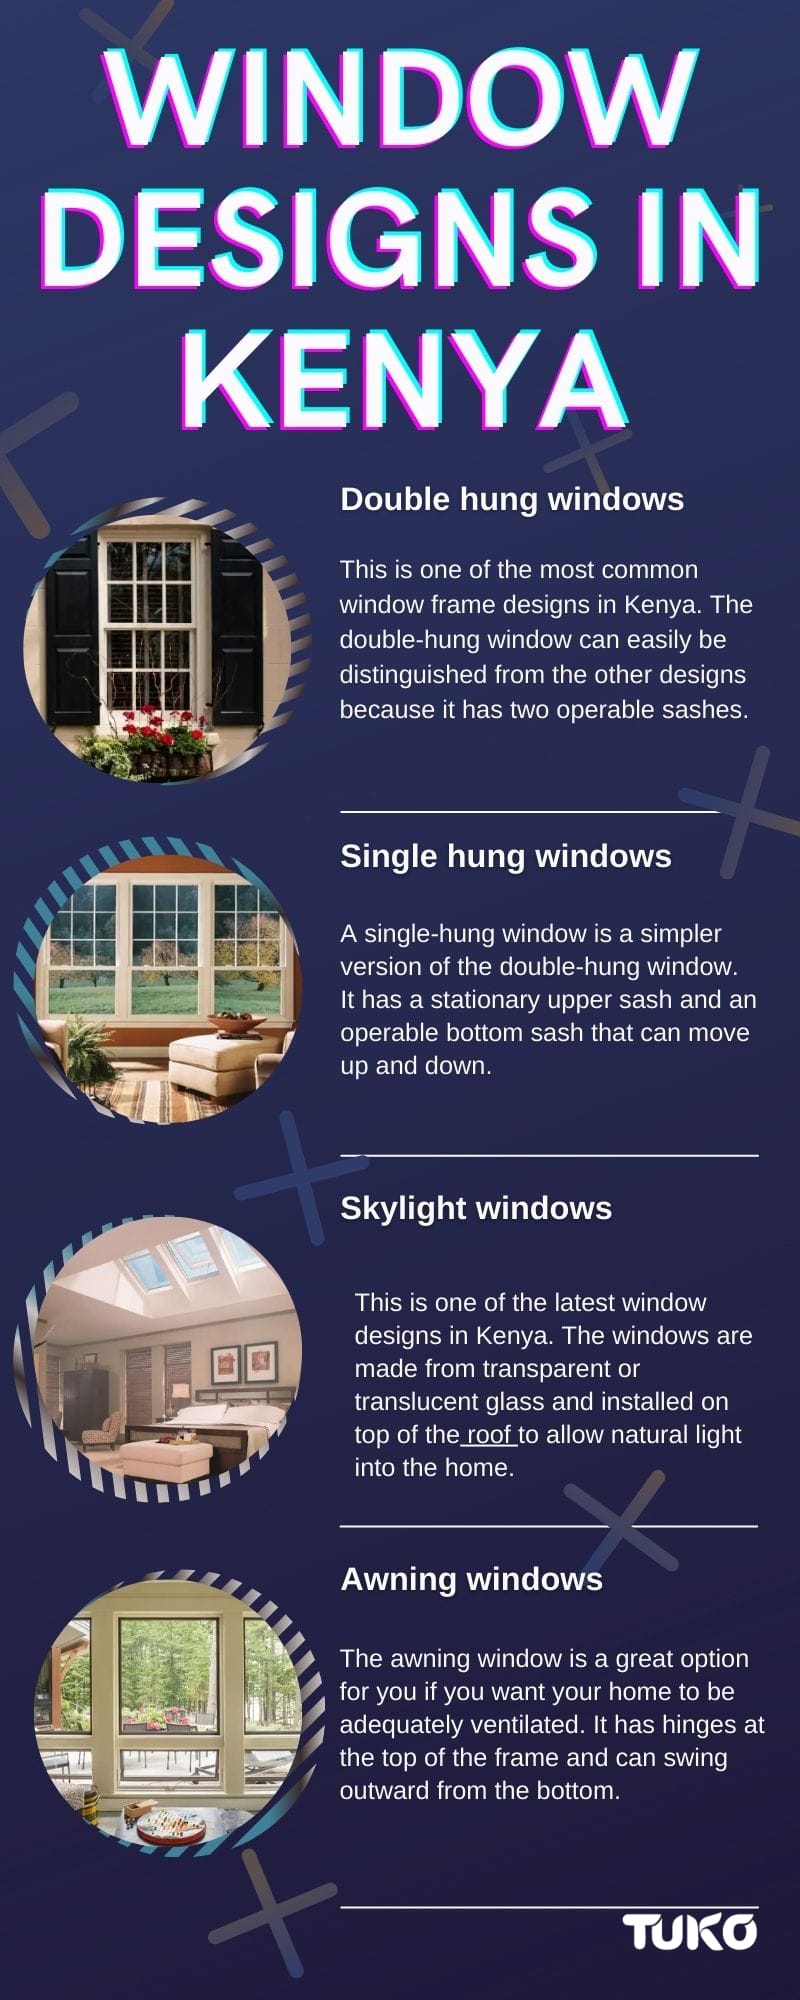 Different window designs in Kenya